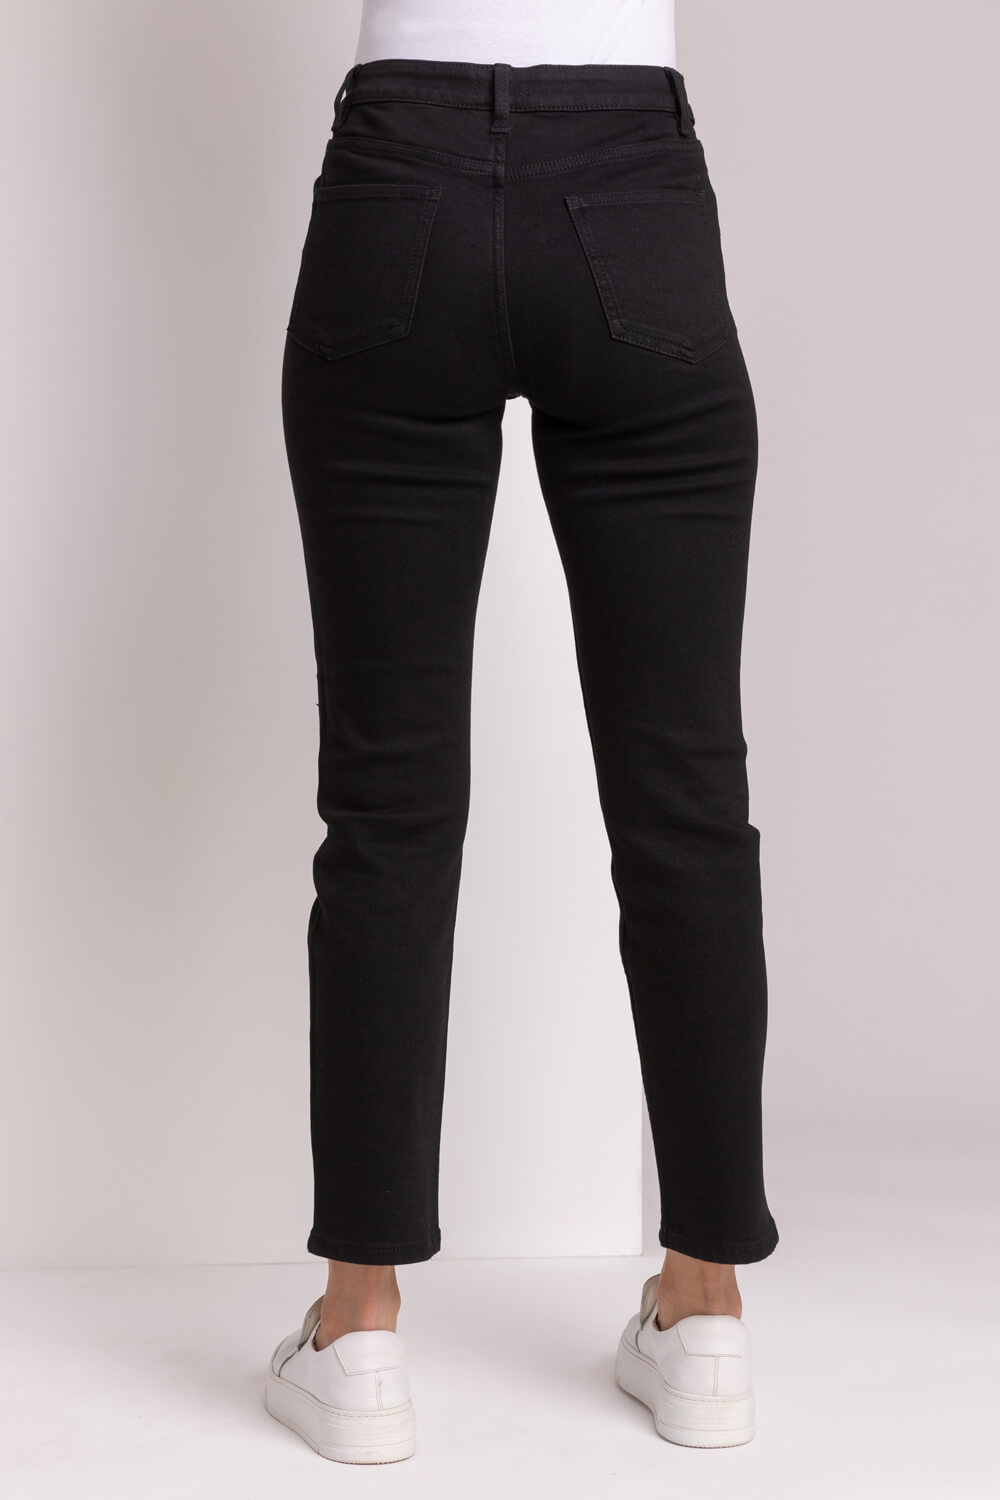 Black 29" Stretch Slim Leg Jeans, Image 2 of 4